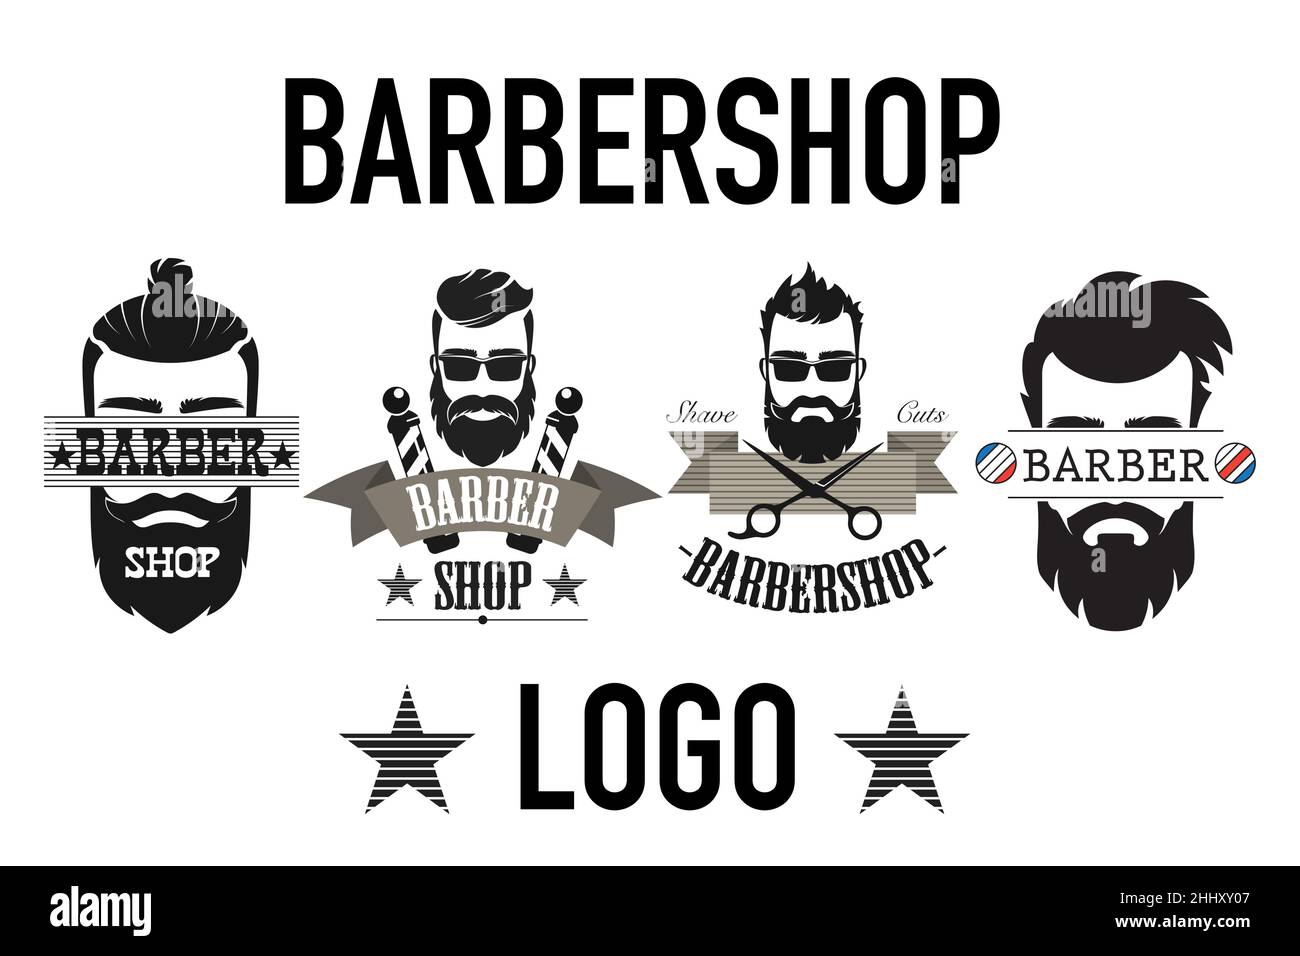 barber shop vector illustration Stock Vector